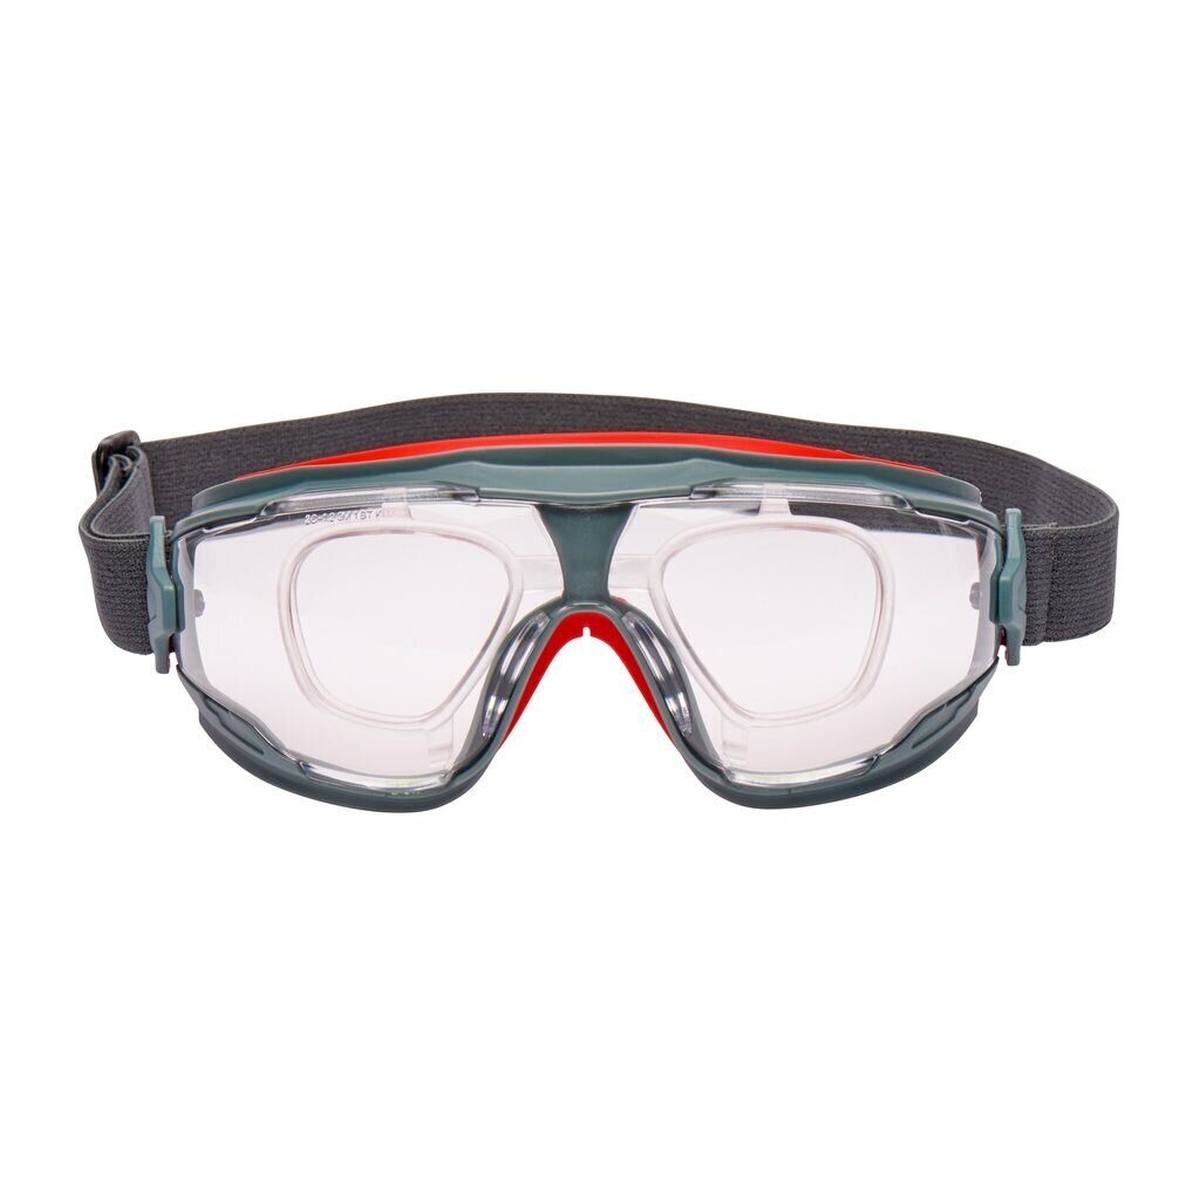 3M GoggleGear 500 Lunettes-masque GG501V, écran clair, anti-buée Scotchgard, UV